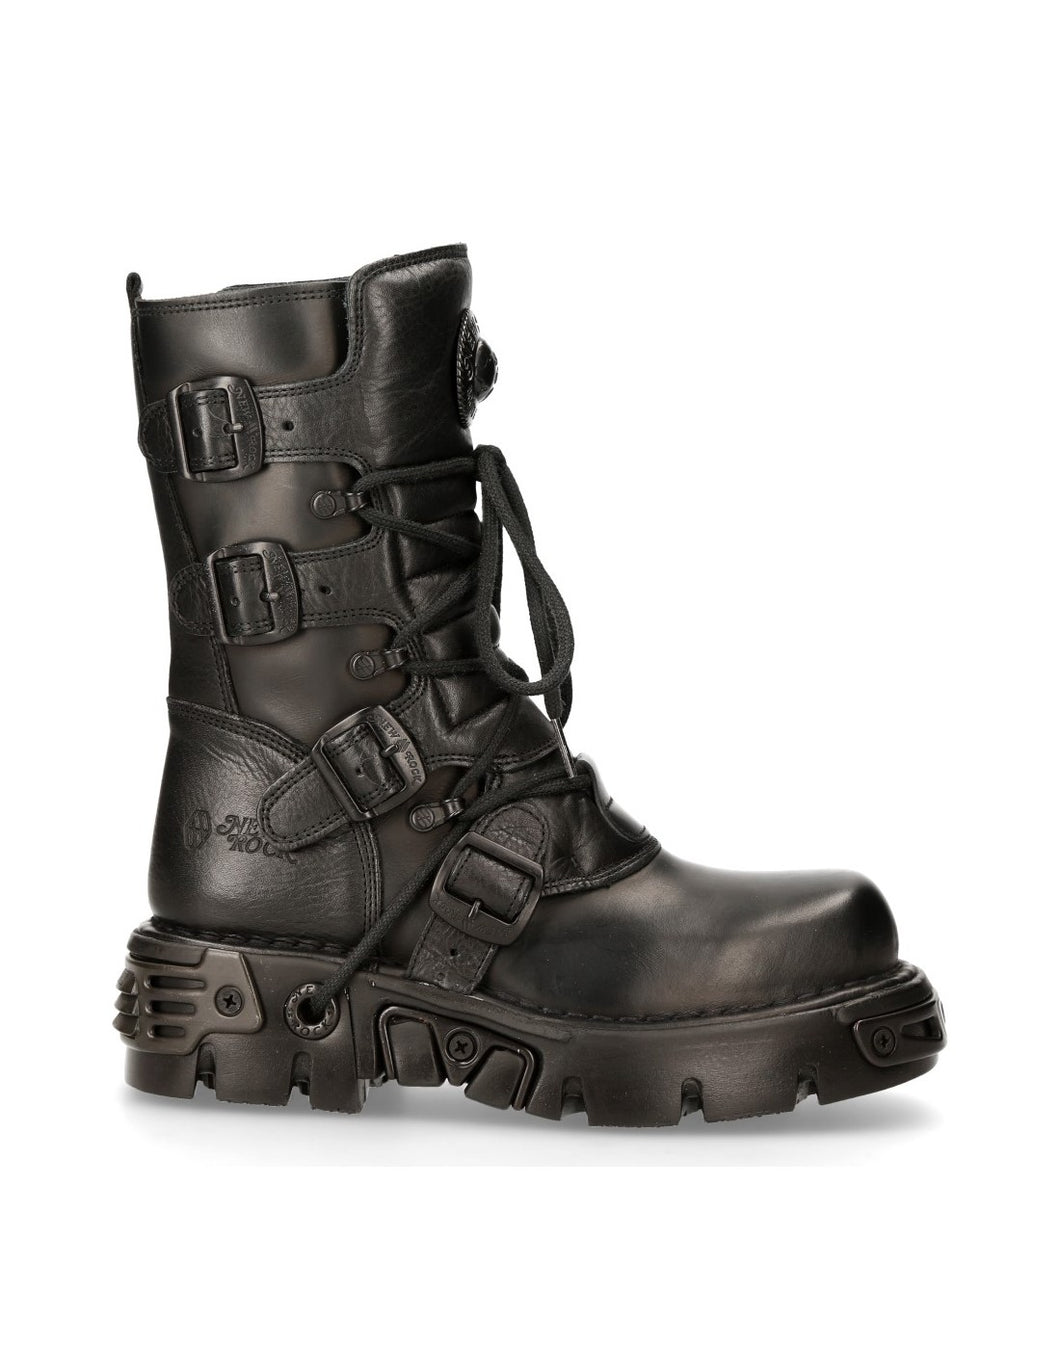 New Rock Shoes Boots M.373-S18 Boots Biker Boots Gothic Unisex